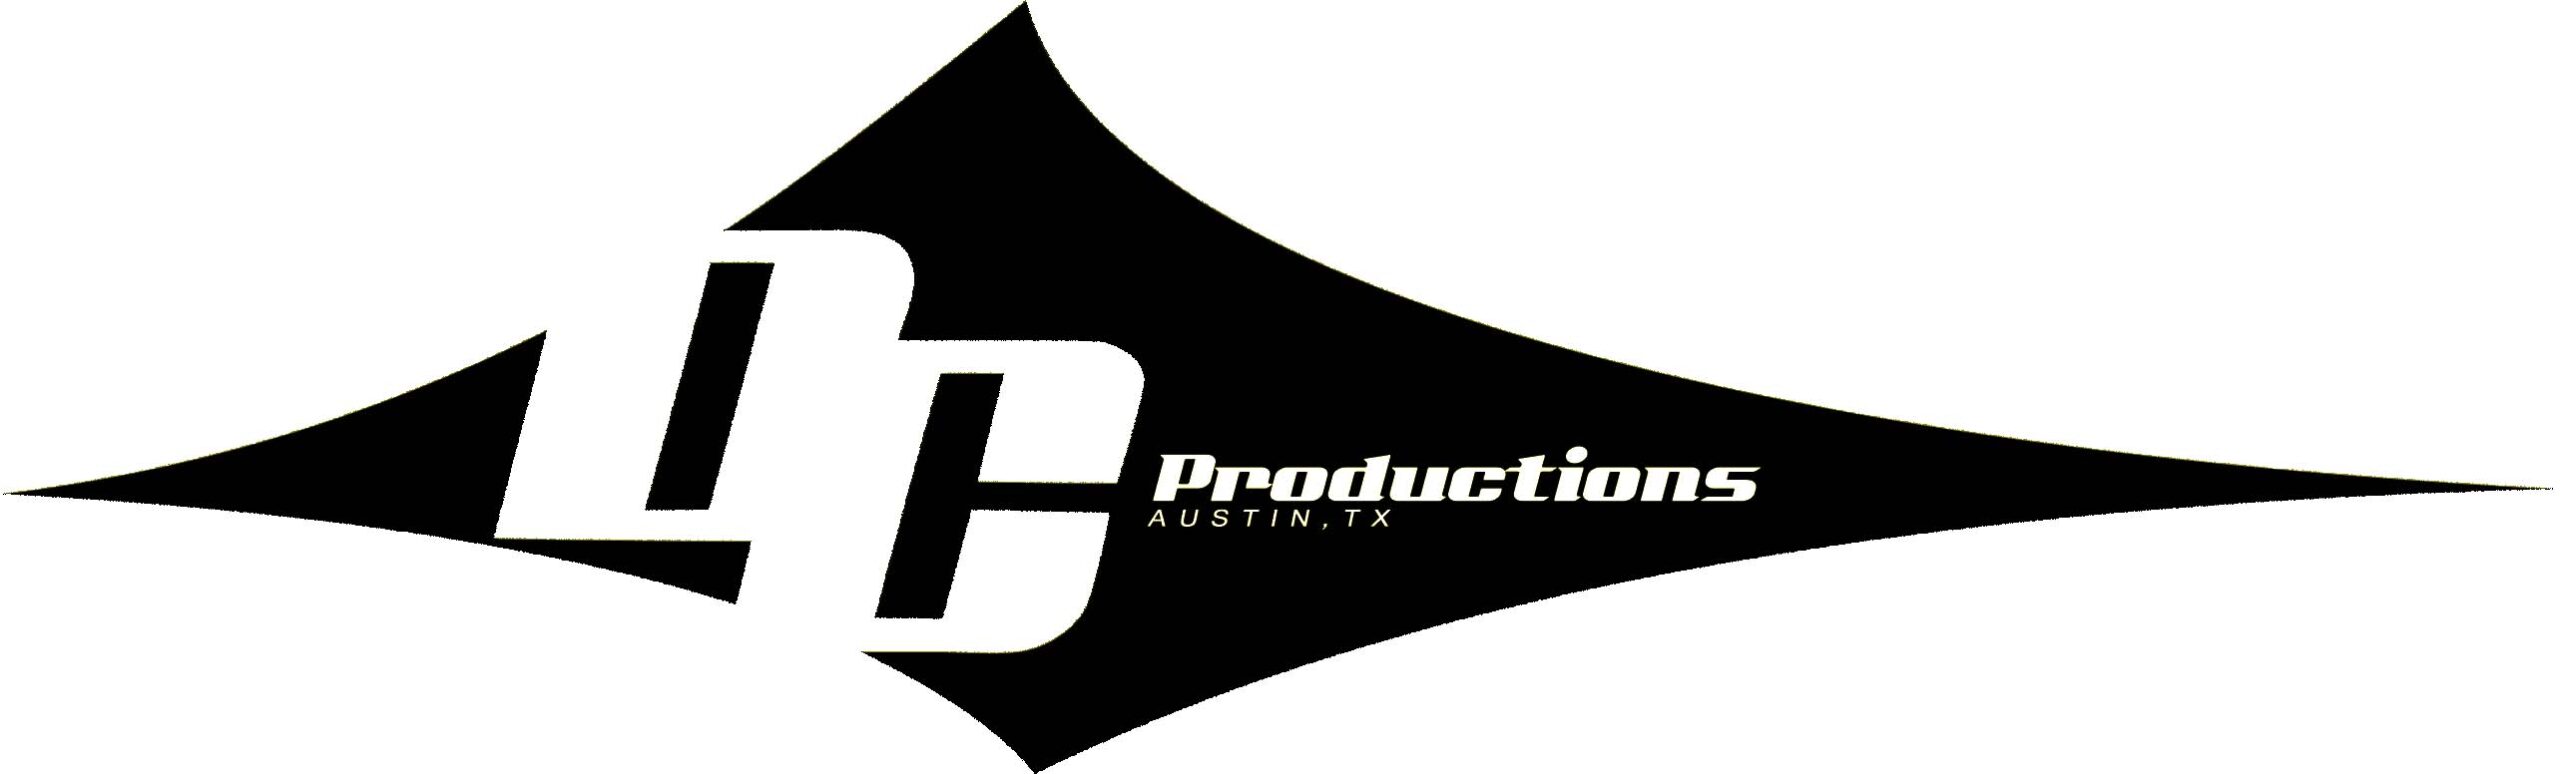 DC Productions 